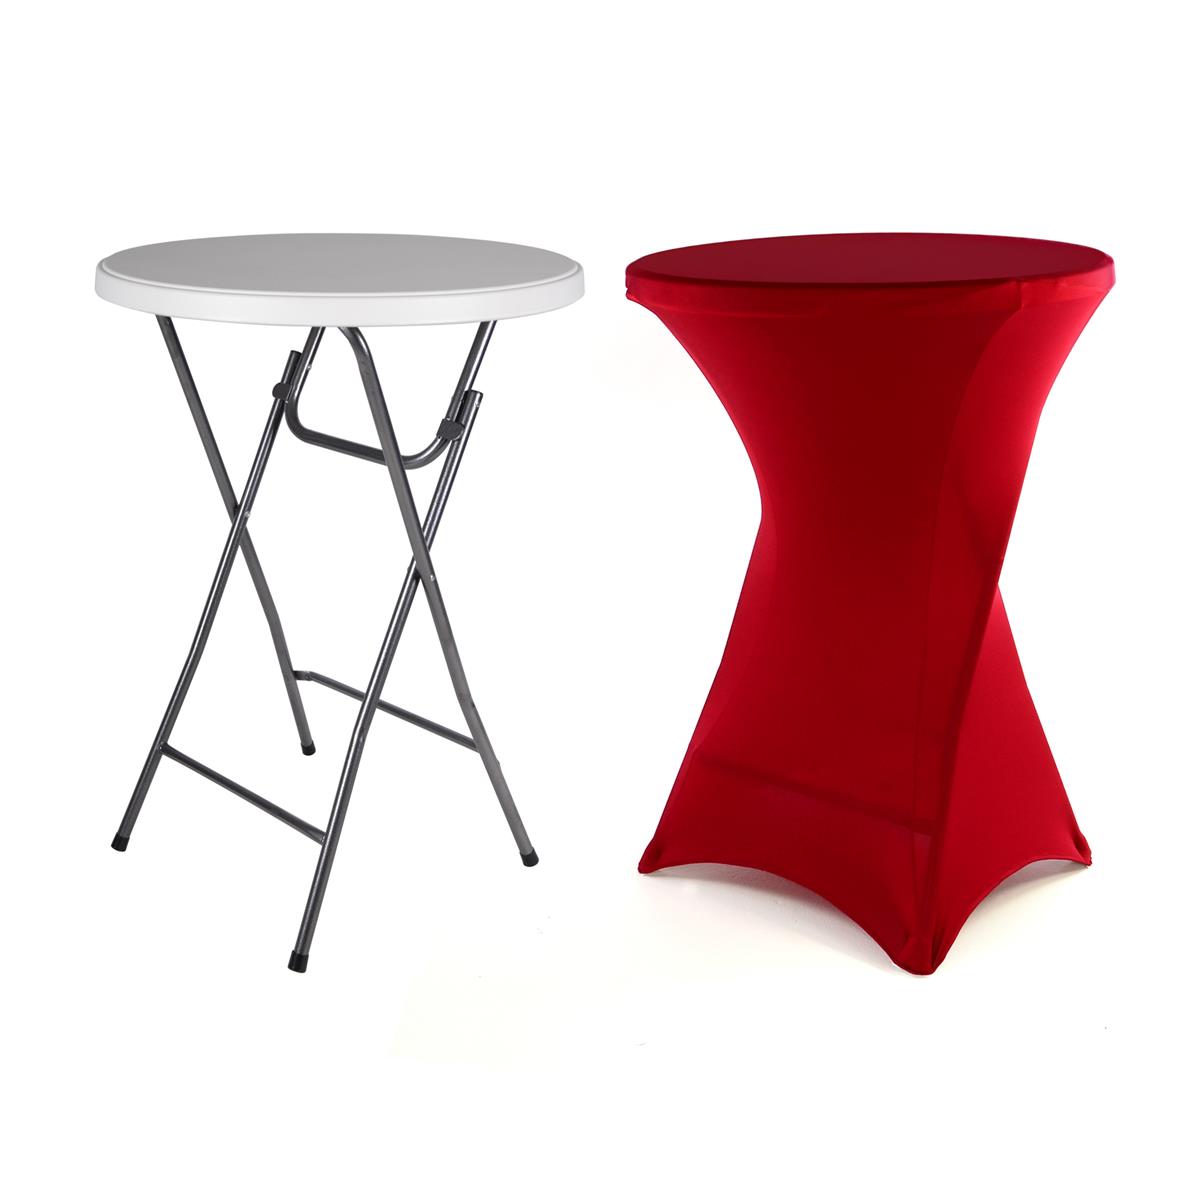 Cateringový stůl s červeným potahem, 110 cm, sklopný bílý